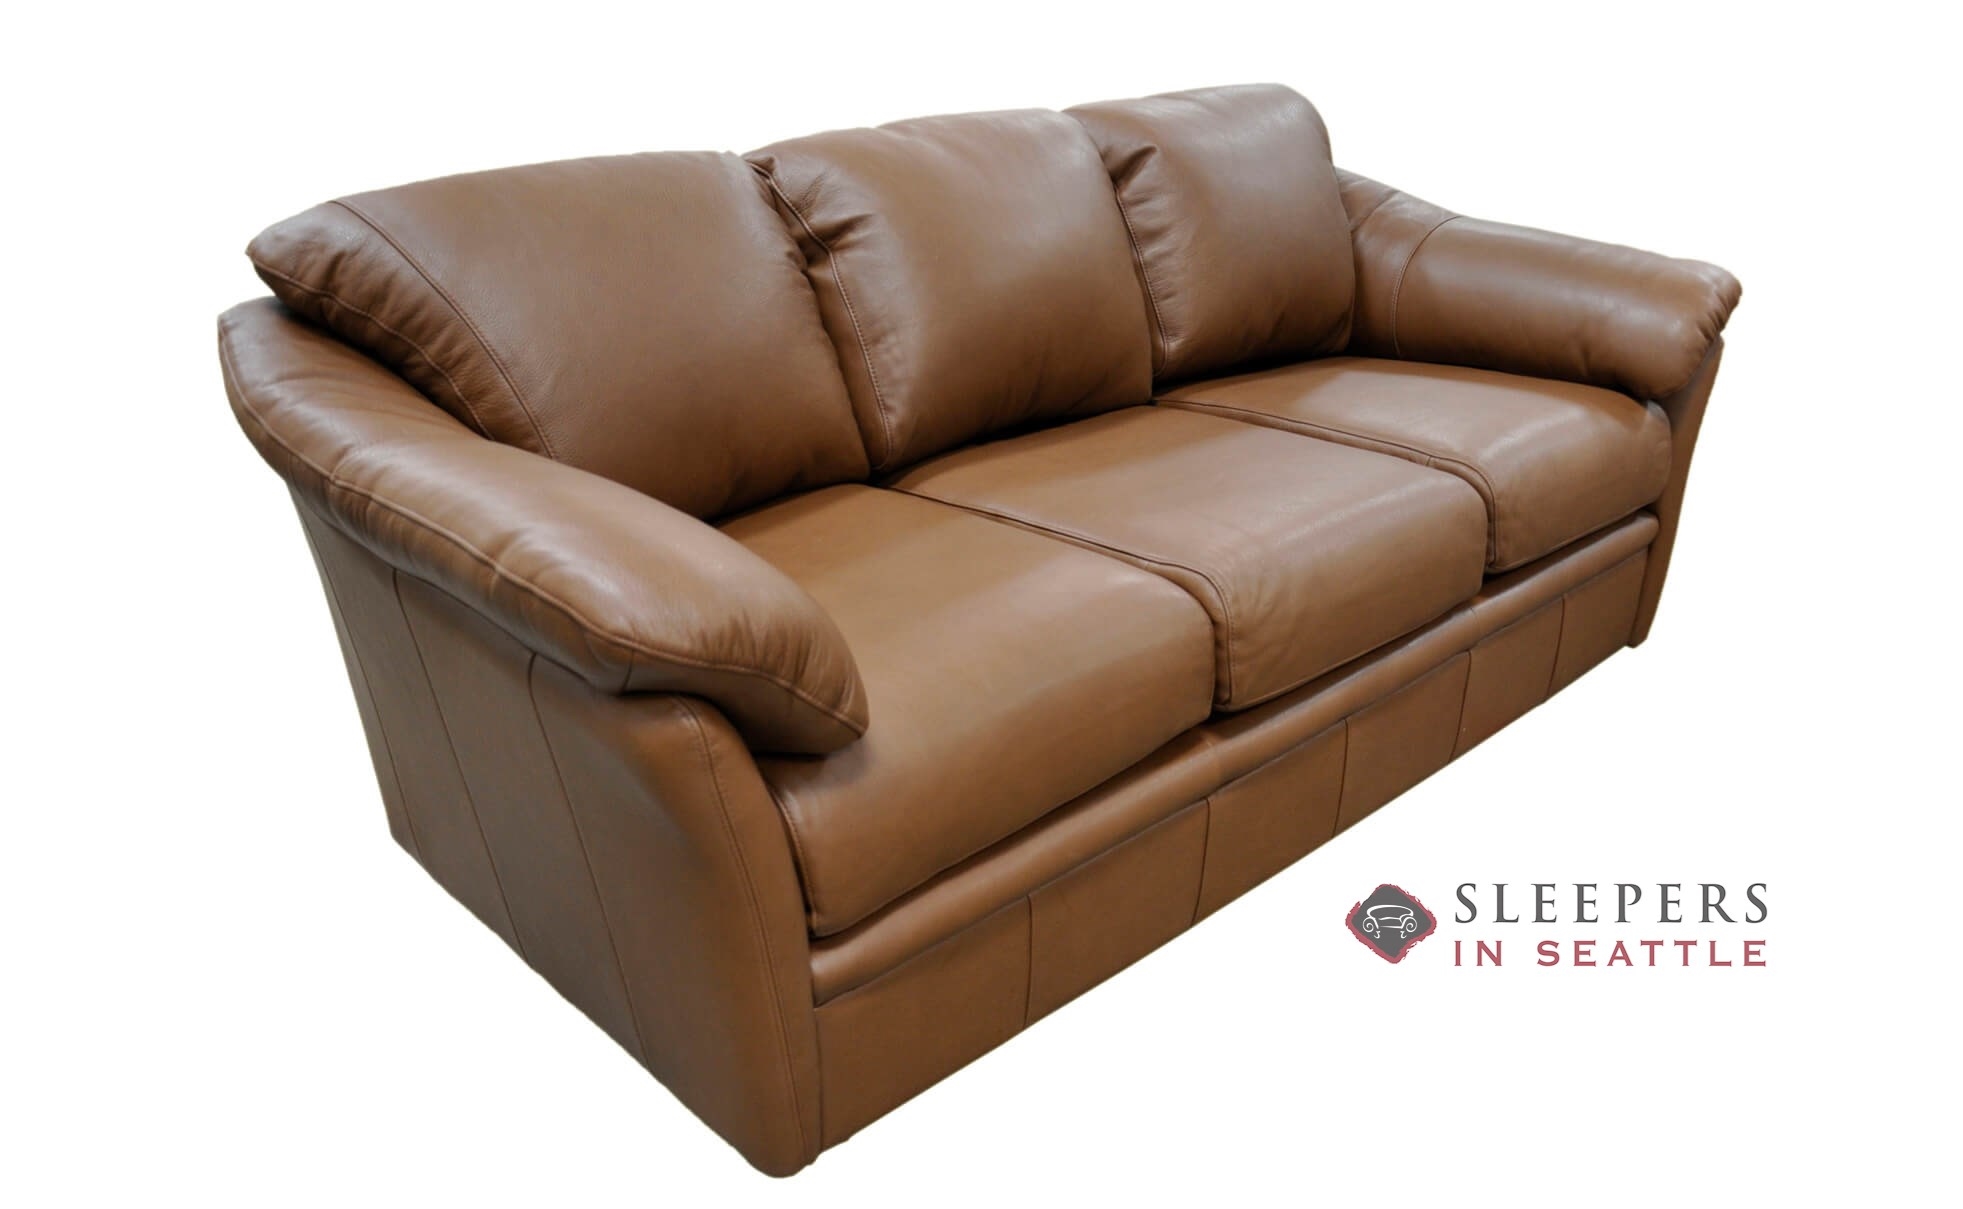 omnia city sleek leather sofa